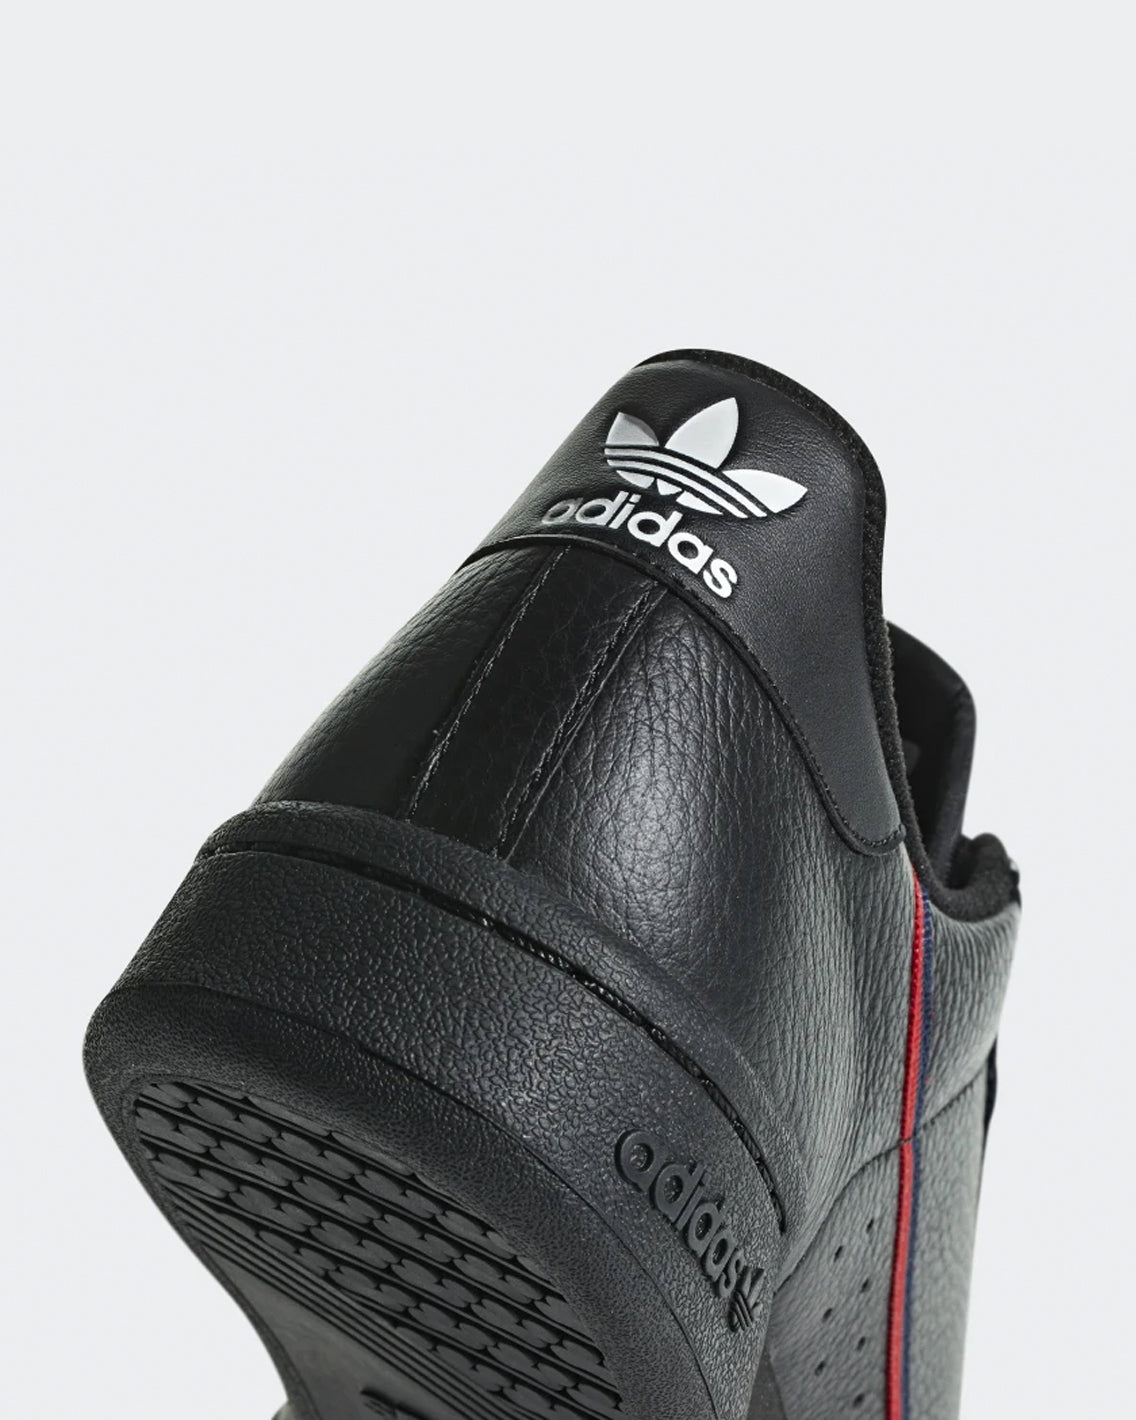 Adidas Originals - Continental 80 - Core Black/Scarlet/Collegiate Navy